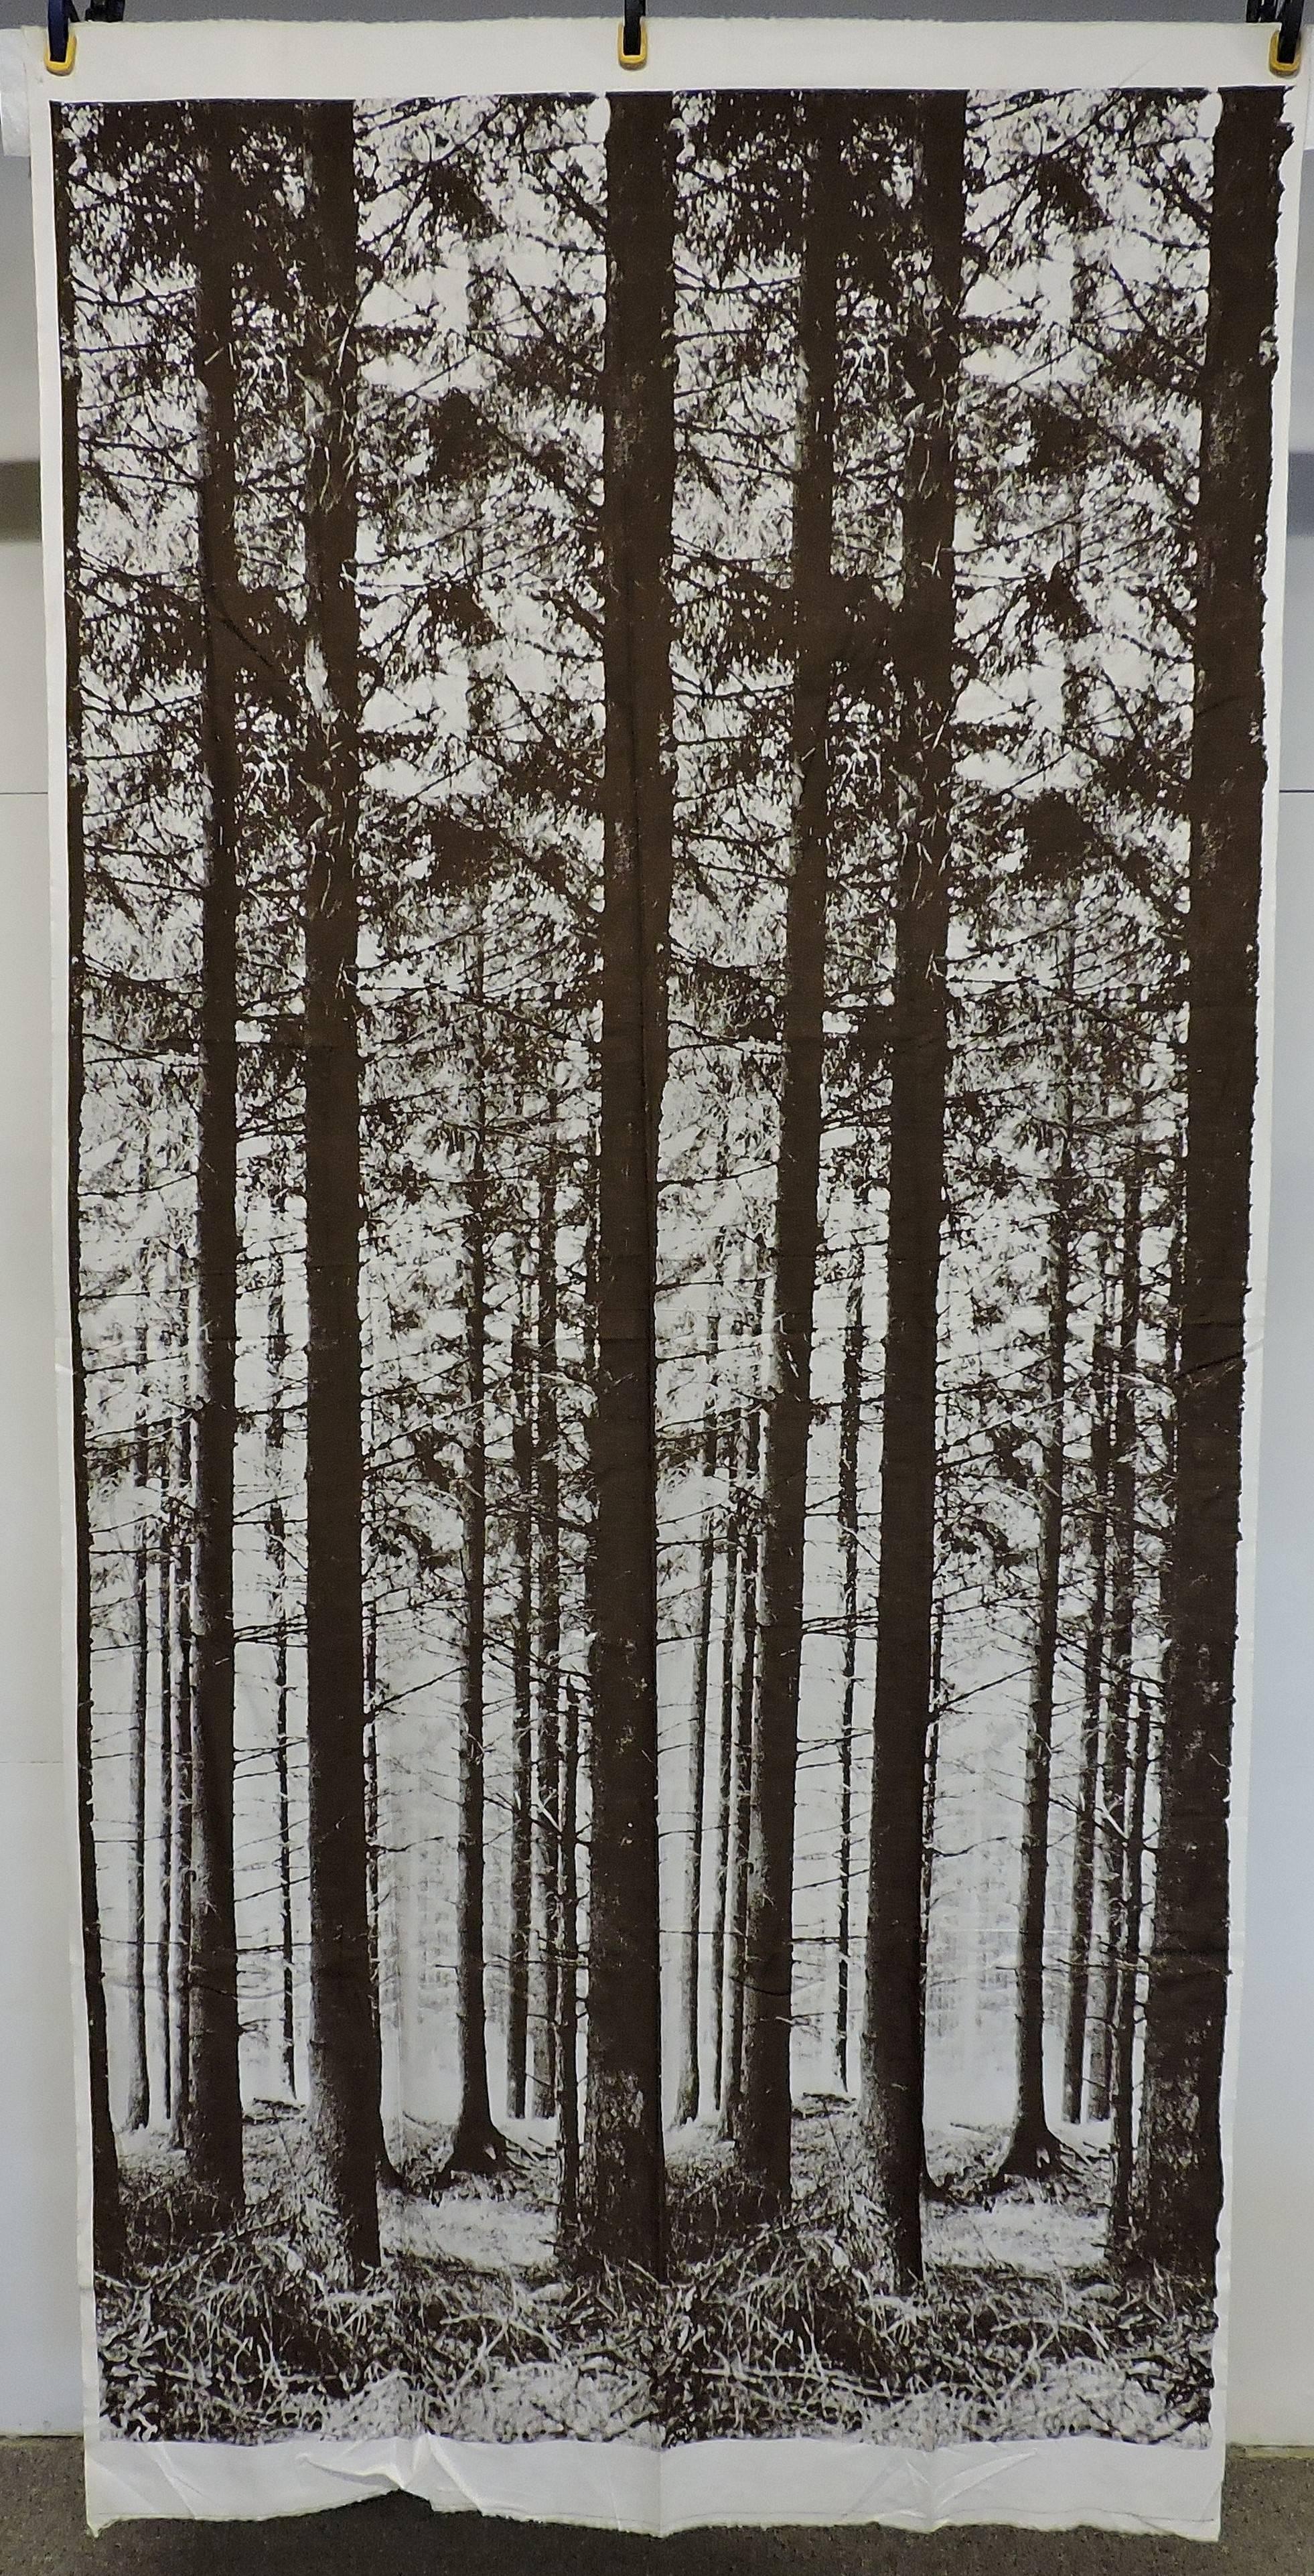 Late 20th Century Mid-Century Modern Textile Wall Panel by Ronald Hansen for Grautex, Denmark